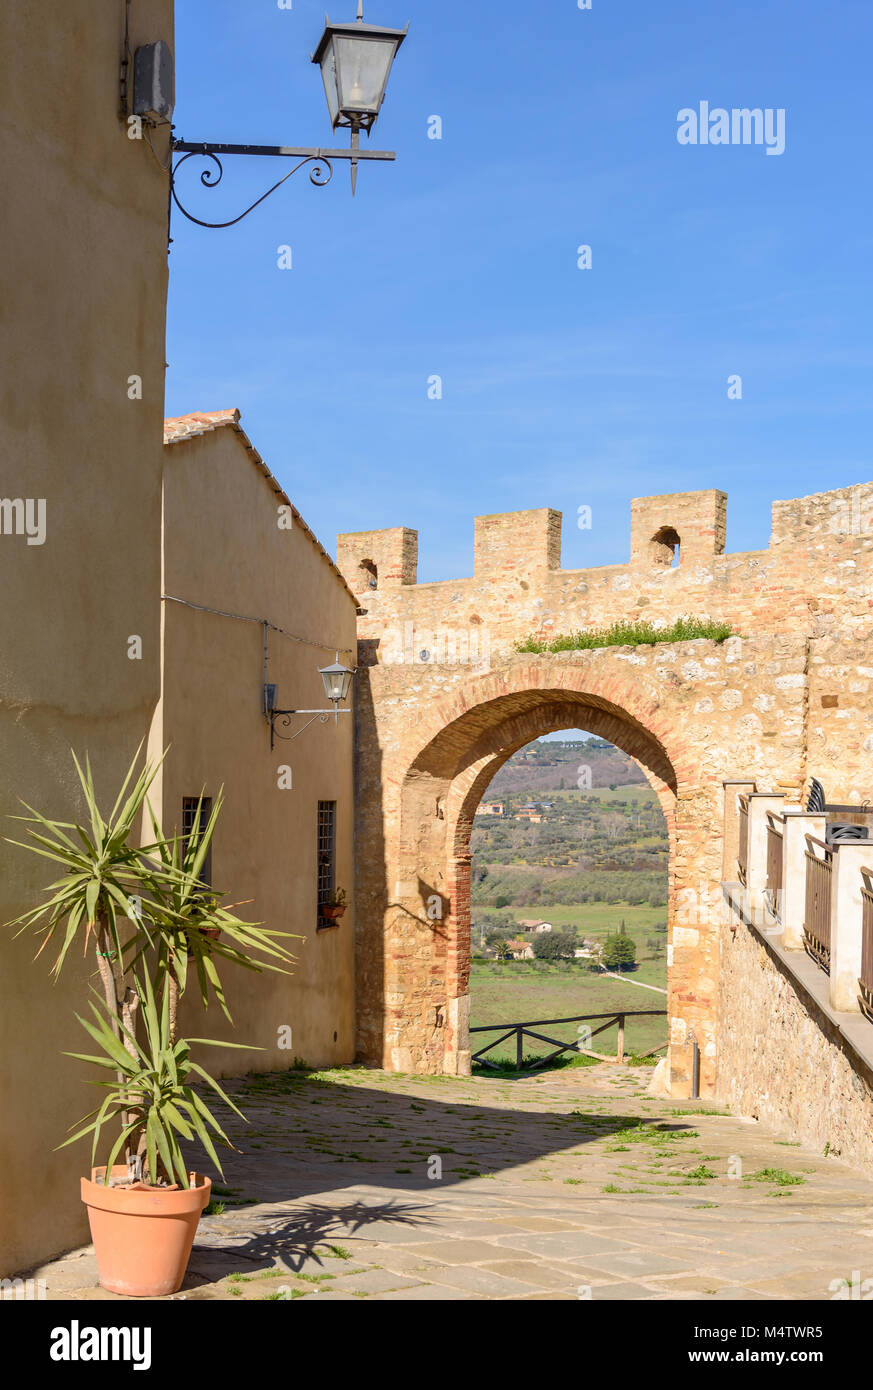 Die Mauern von Magliano in Toscana, Toskana, Italien Stockfoto